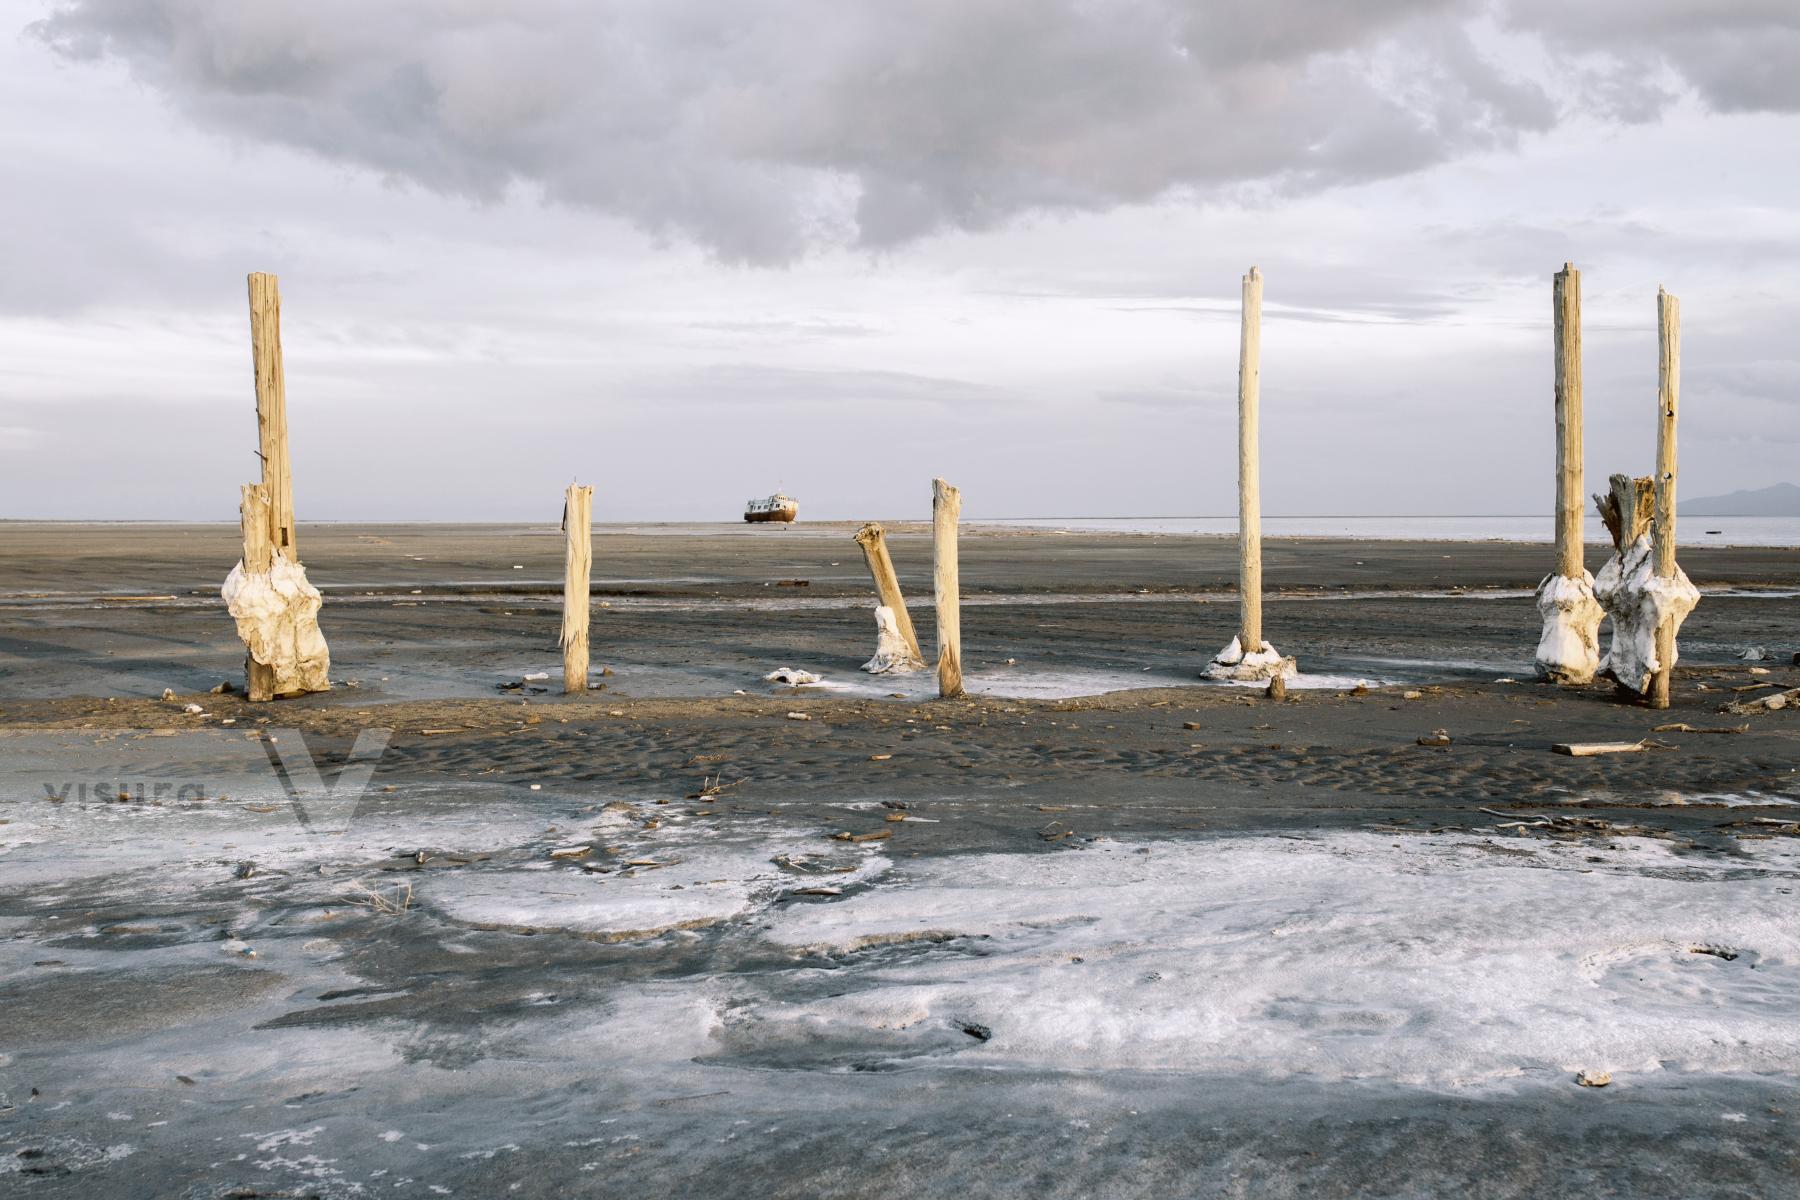 Purchase Lake Urmia: Iran’s most famous lake is disappearing! by Solmaz Daryani